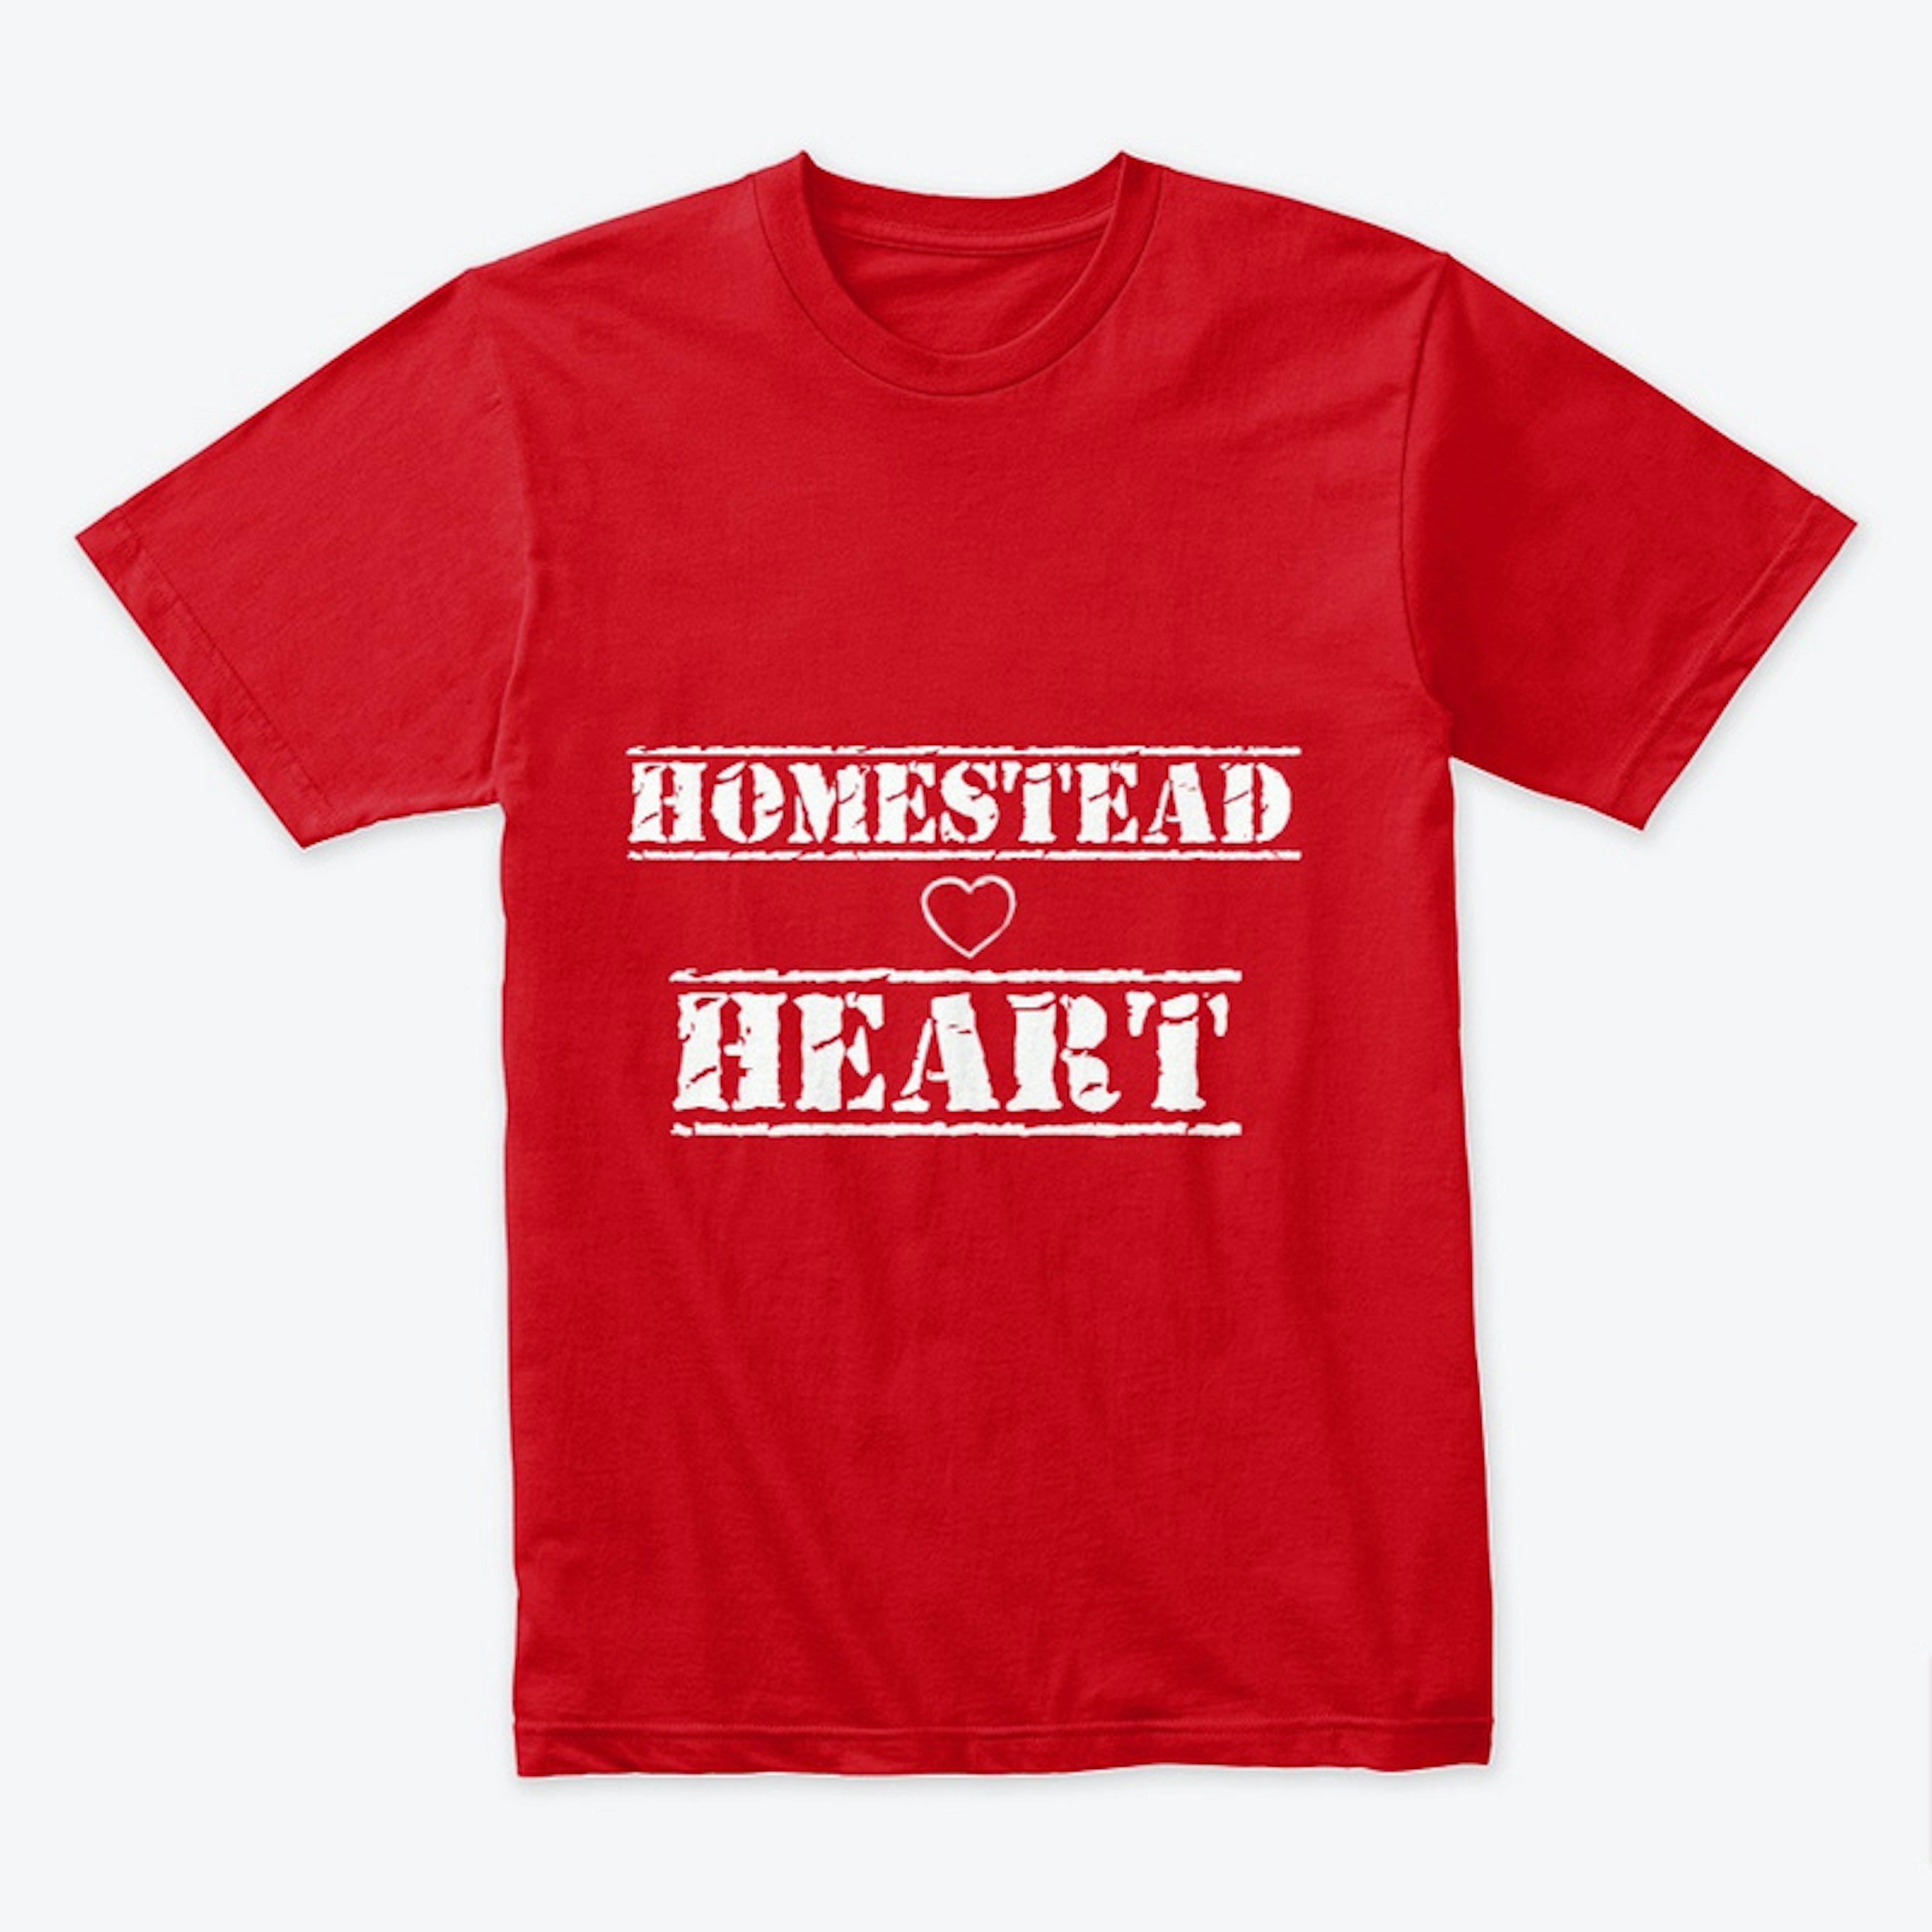 Homestead Heart Gear